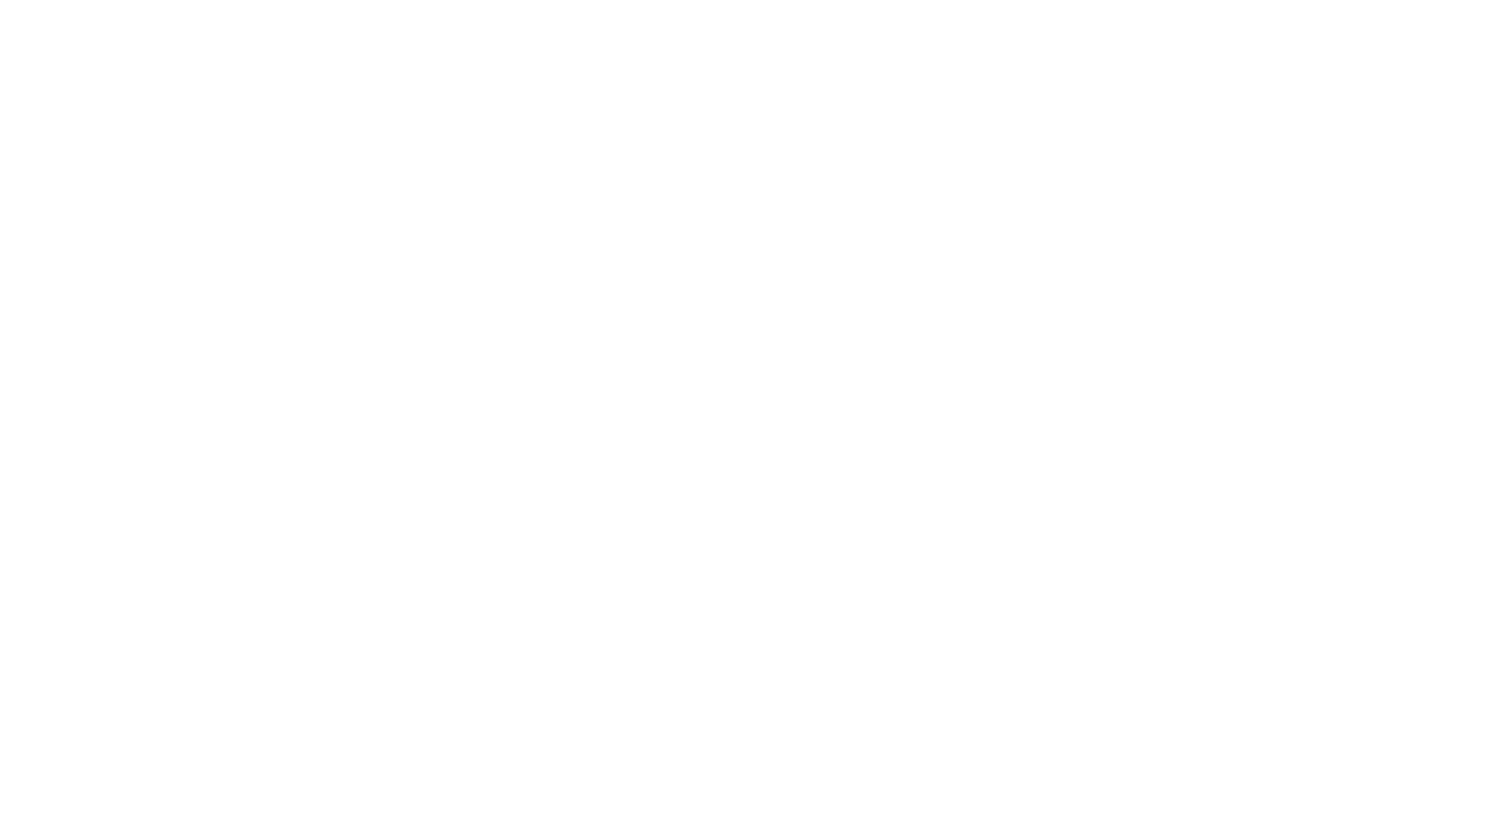 Bryan Travers